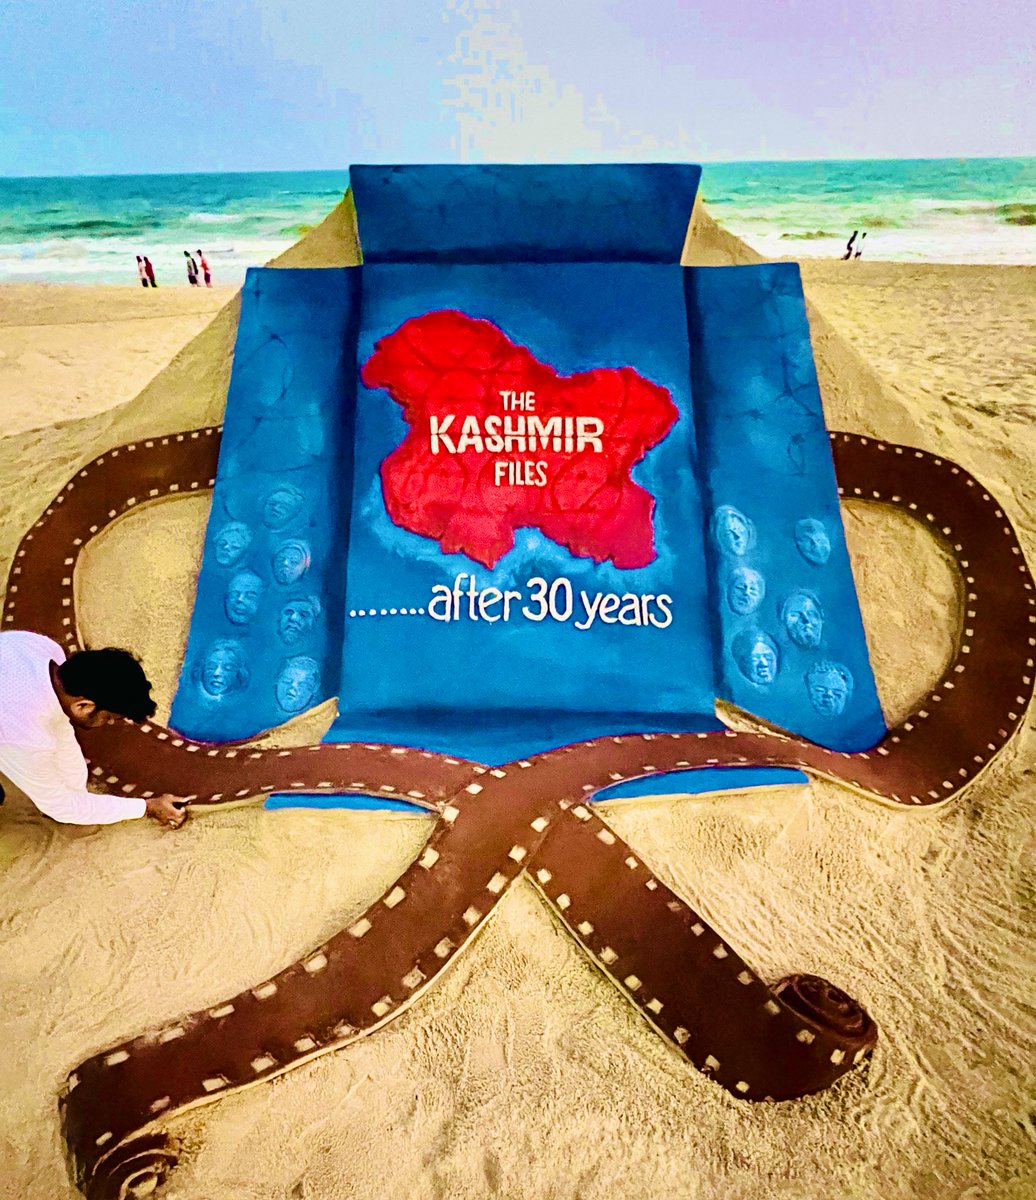 #TheKashmirFiles ……after 30 years.
My SandArt at Puri beach.